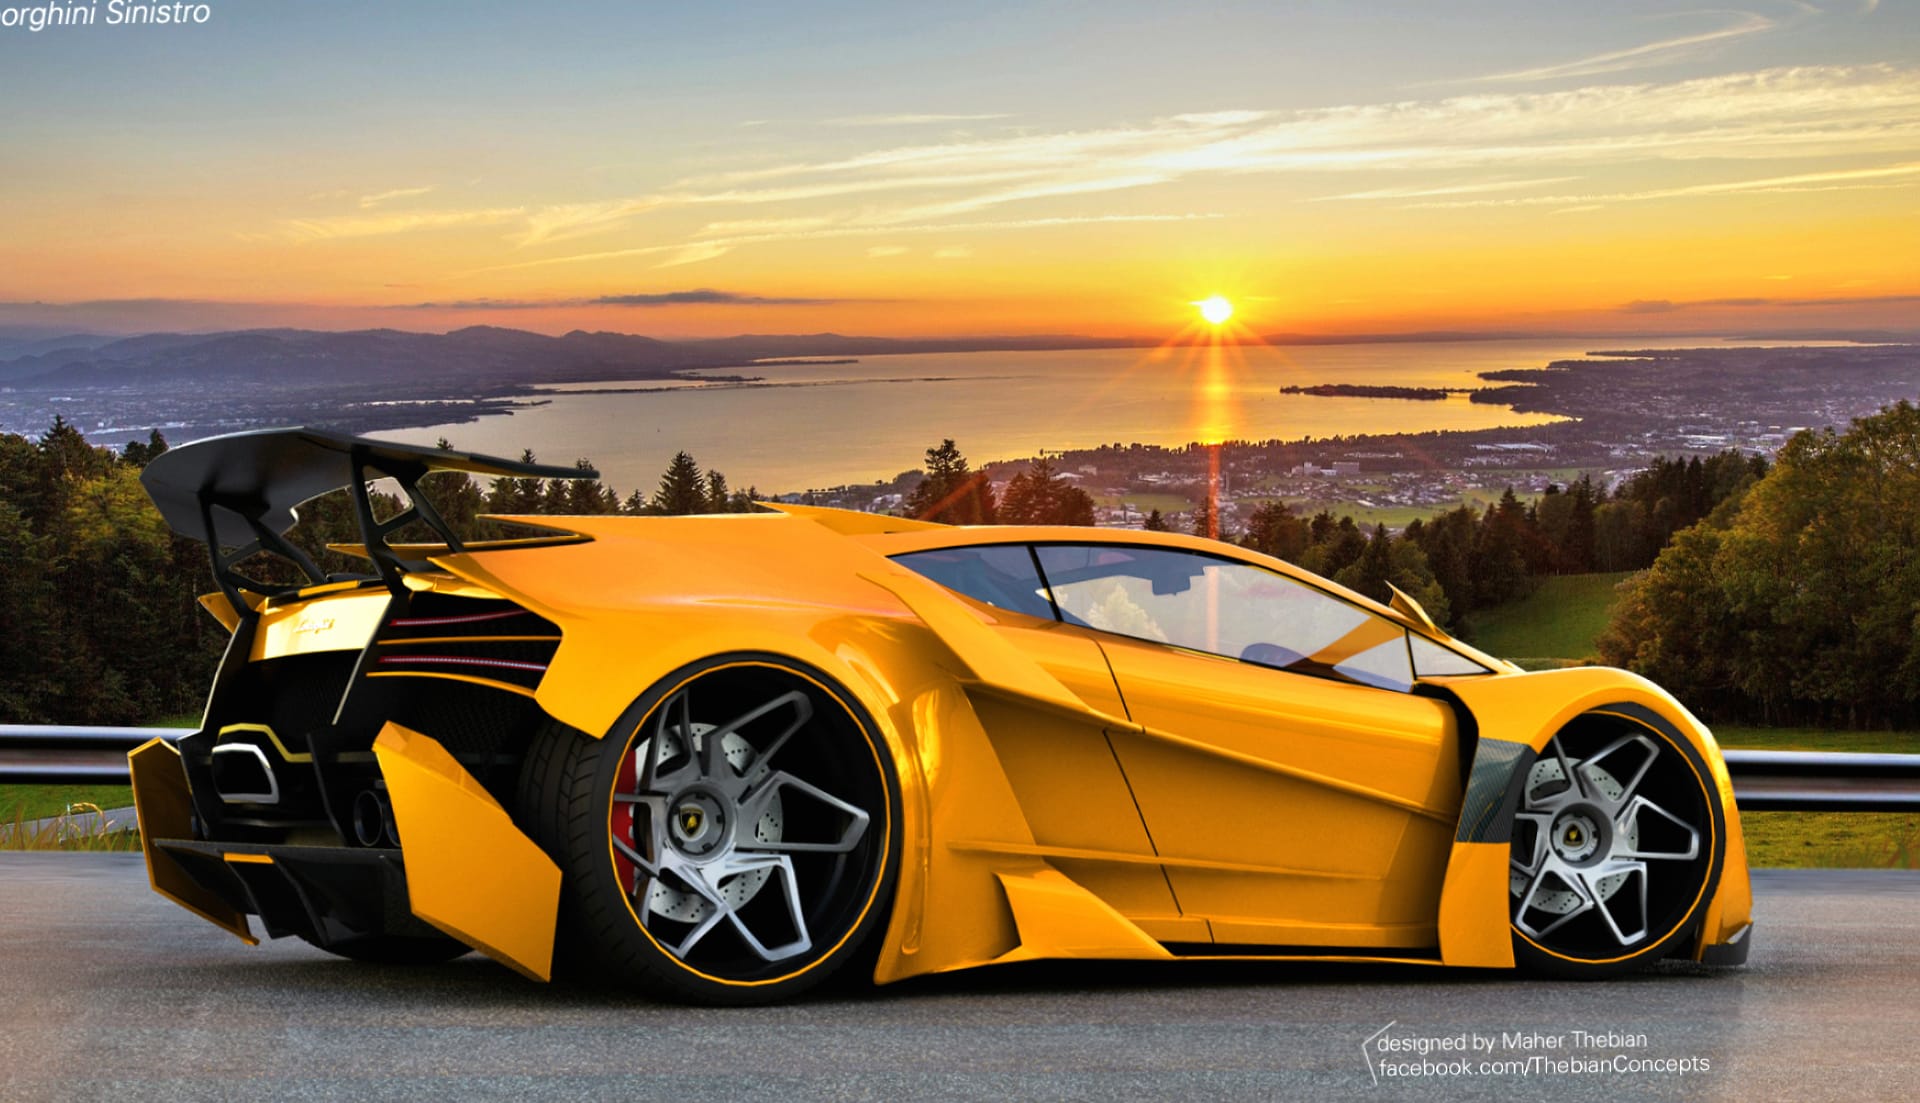 Lamborghini Sinistro Concept at 2048 x 2048 iPad size wallpapers HD quality